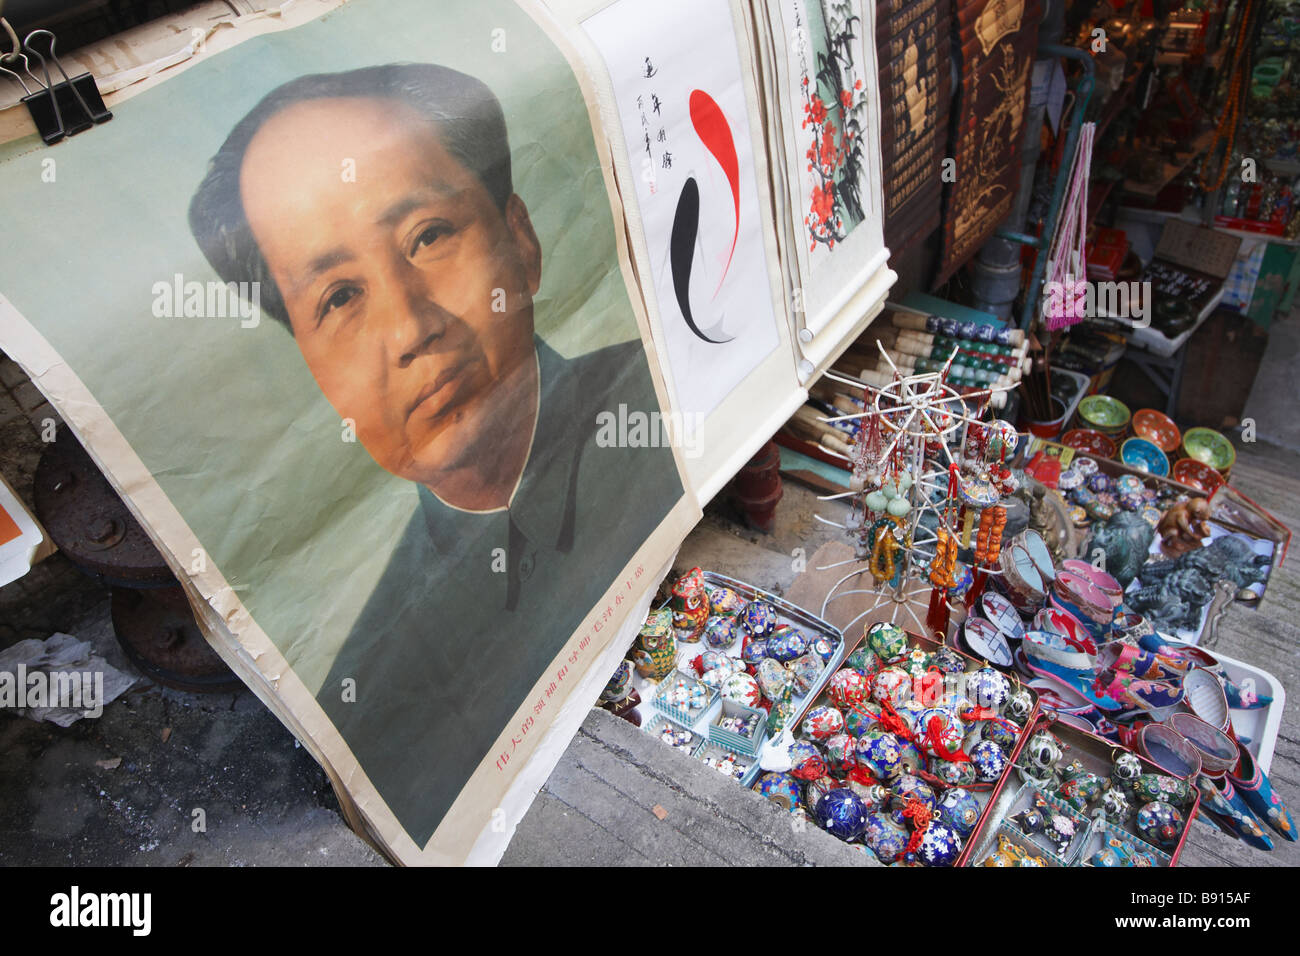 Poster Of Chairman Mao At Antiques Stall, Sheung Wan, Hong Kong Stock Photo